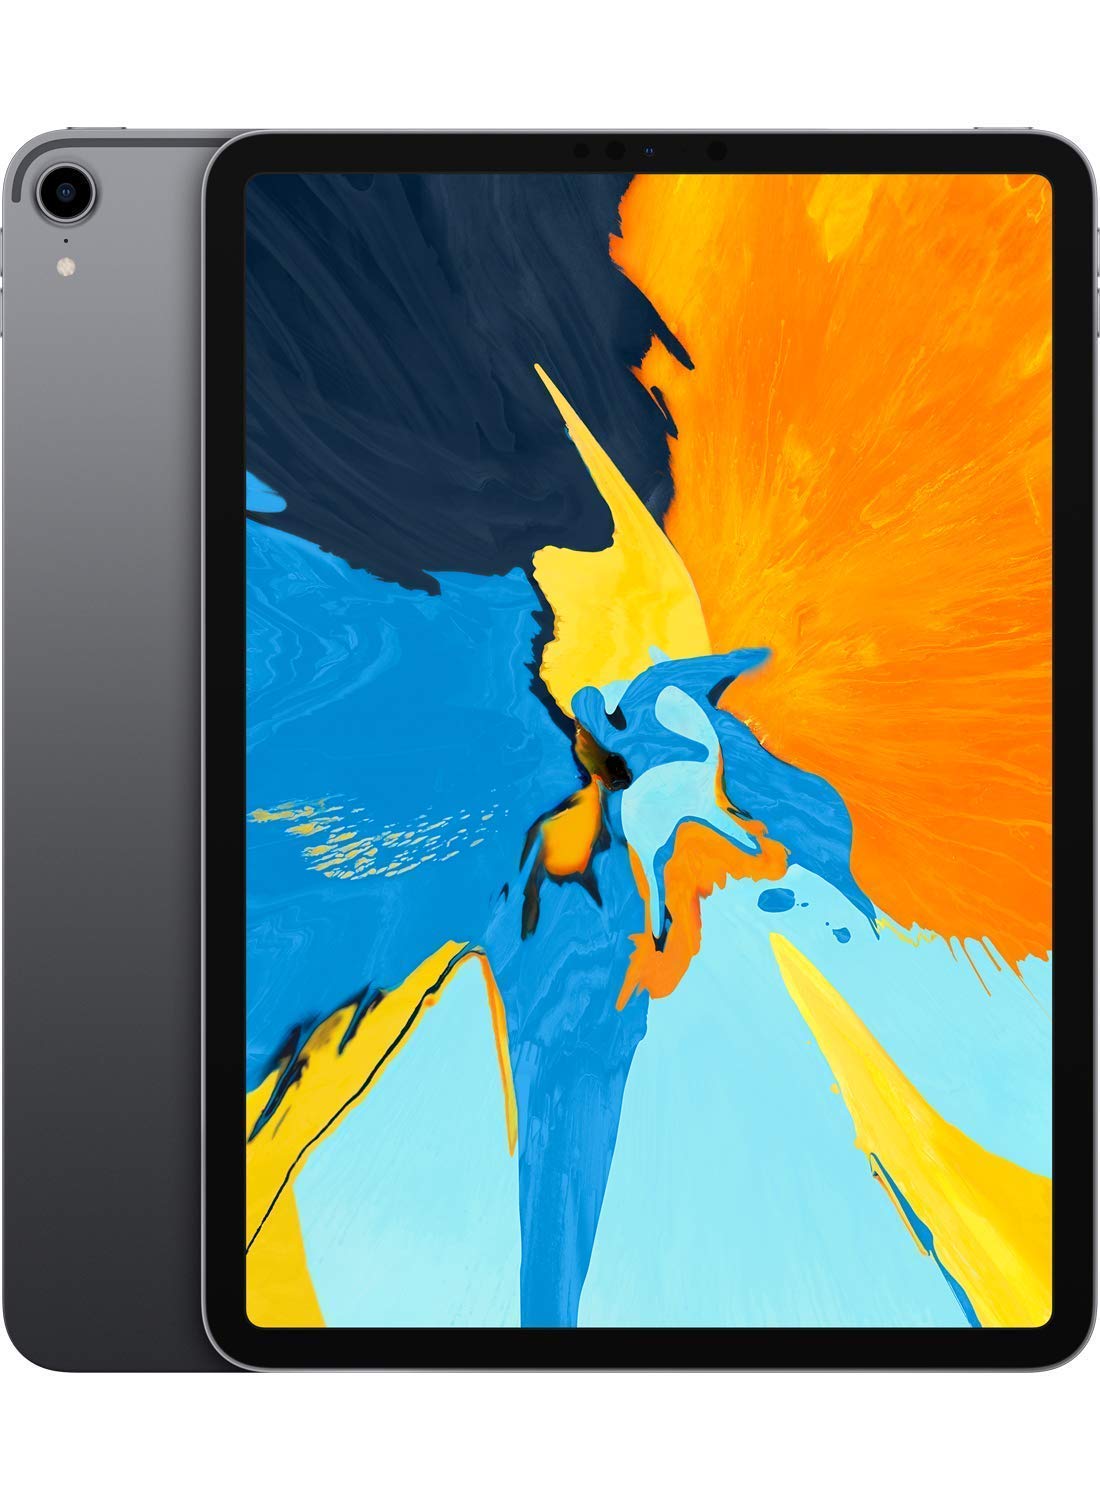 Repair Service iPad Pro 11 inch (A1980, A2013, A1934)